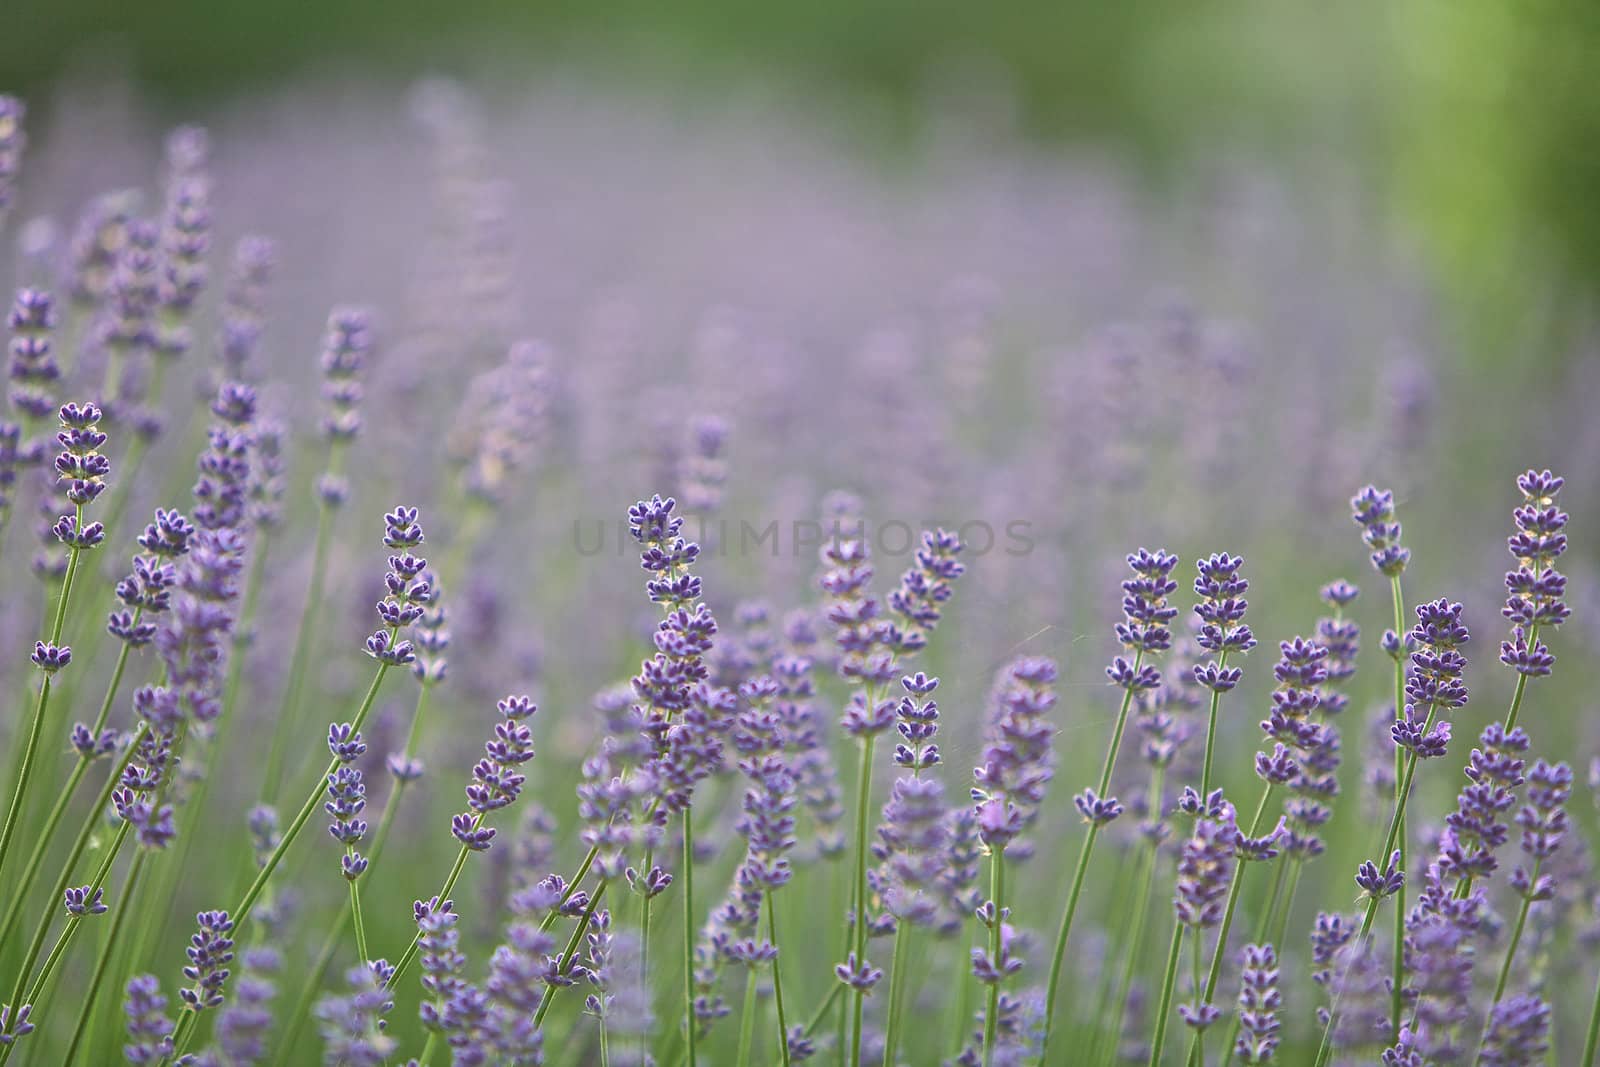 Lilac lavender flowers in a park - Lavandula Angustifolia